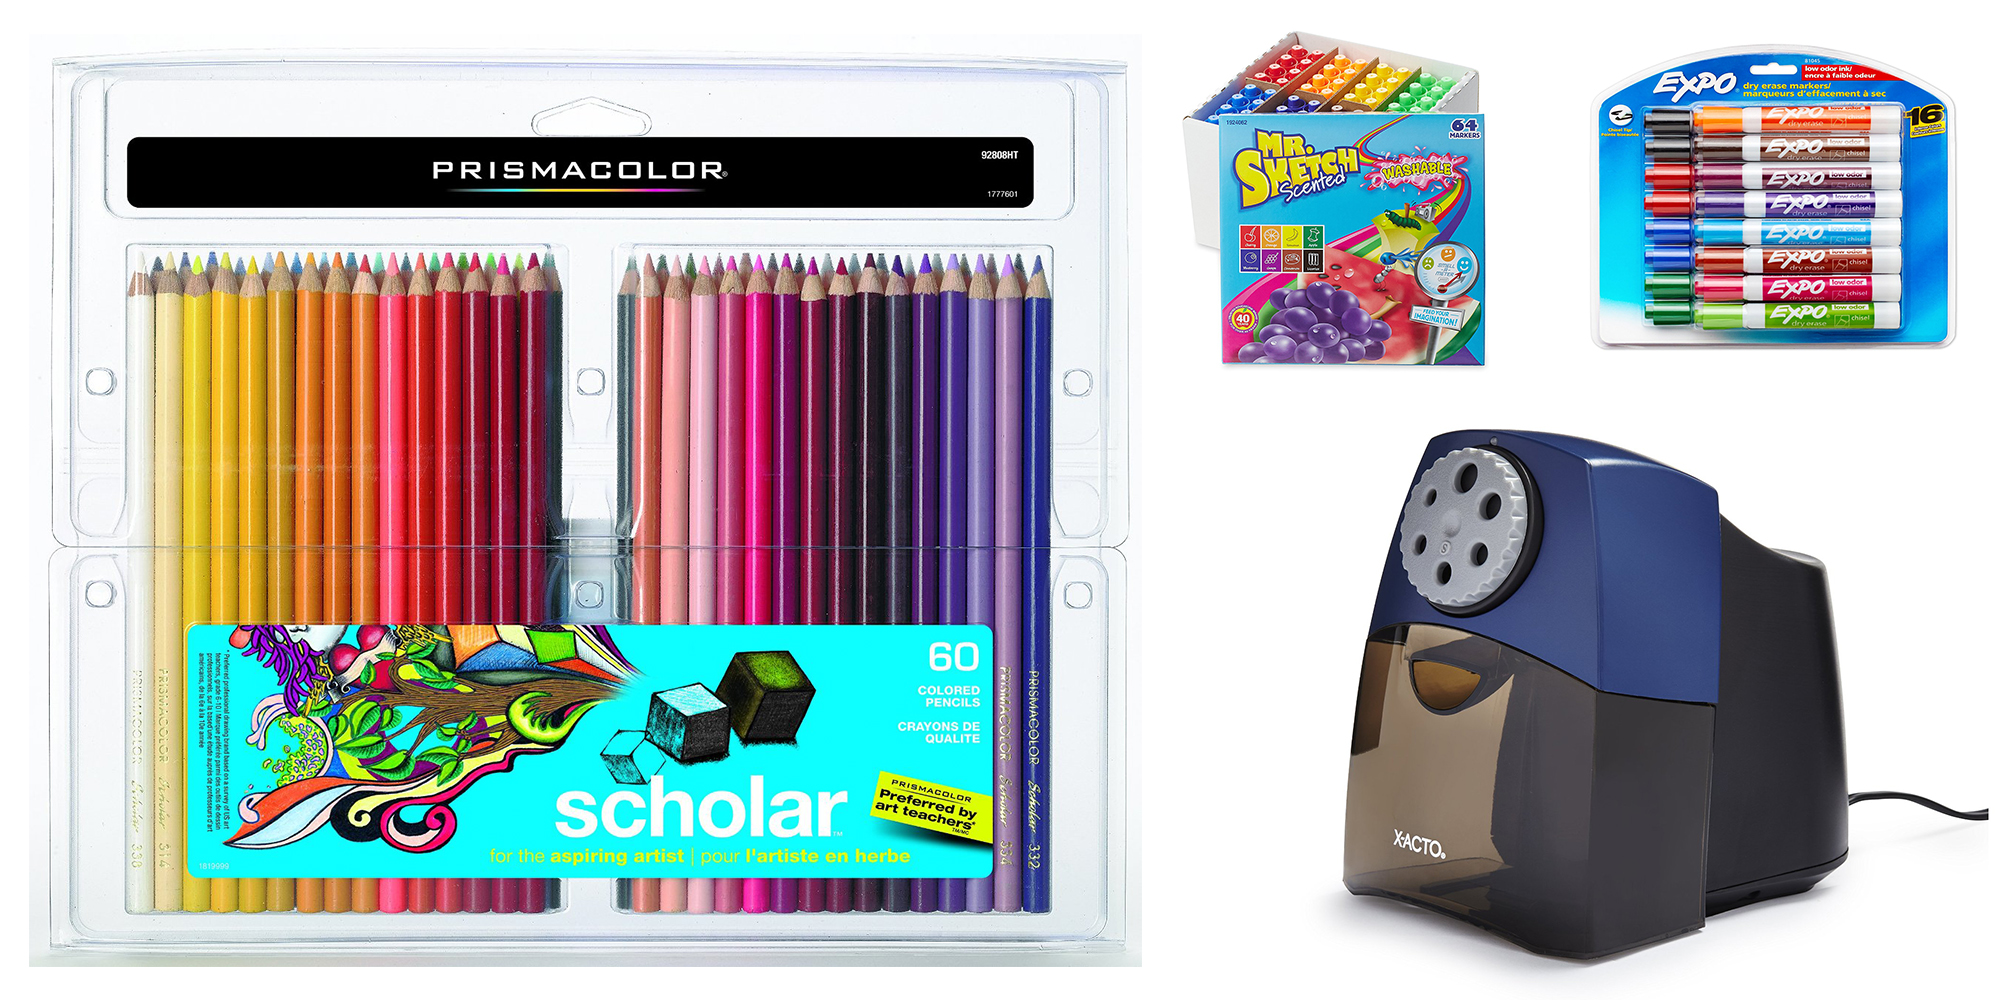 Prismacolor Scholar Pencil Sharpener